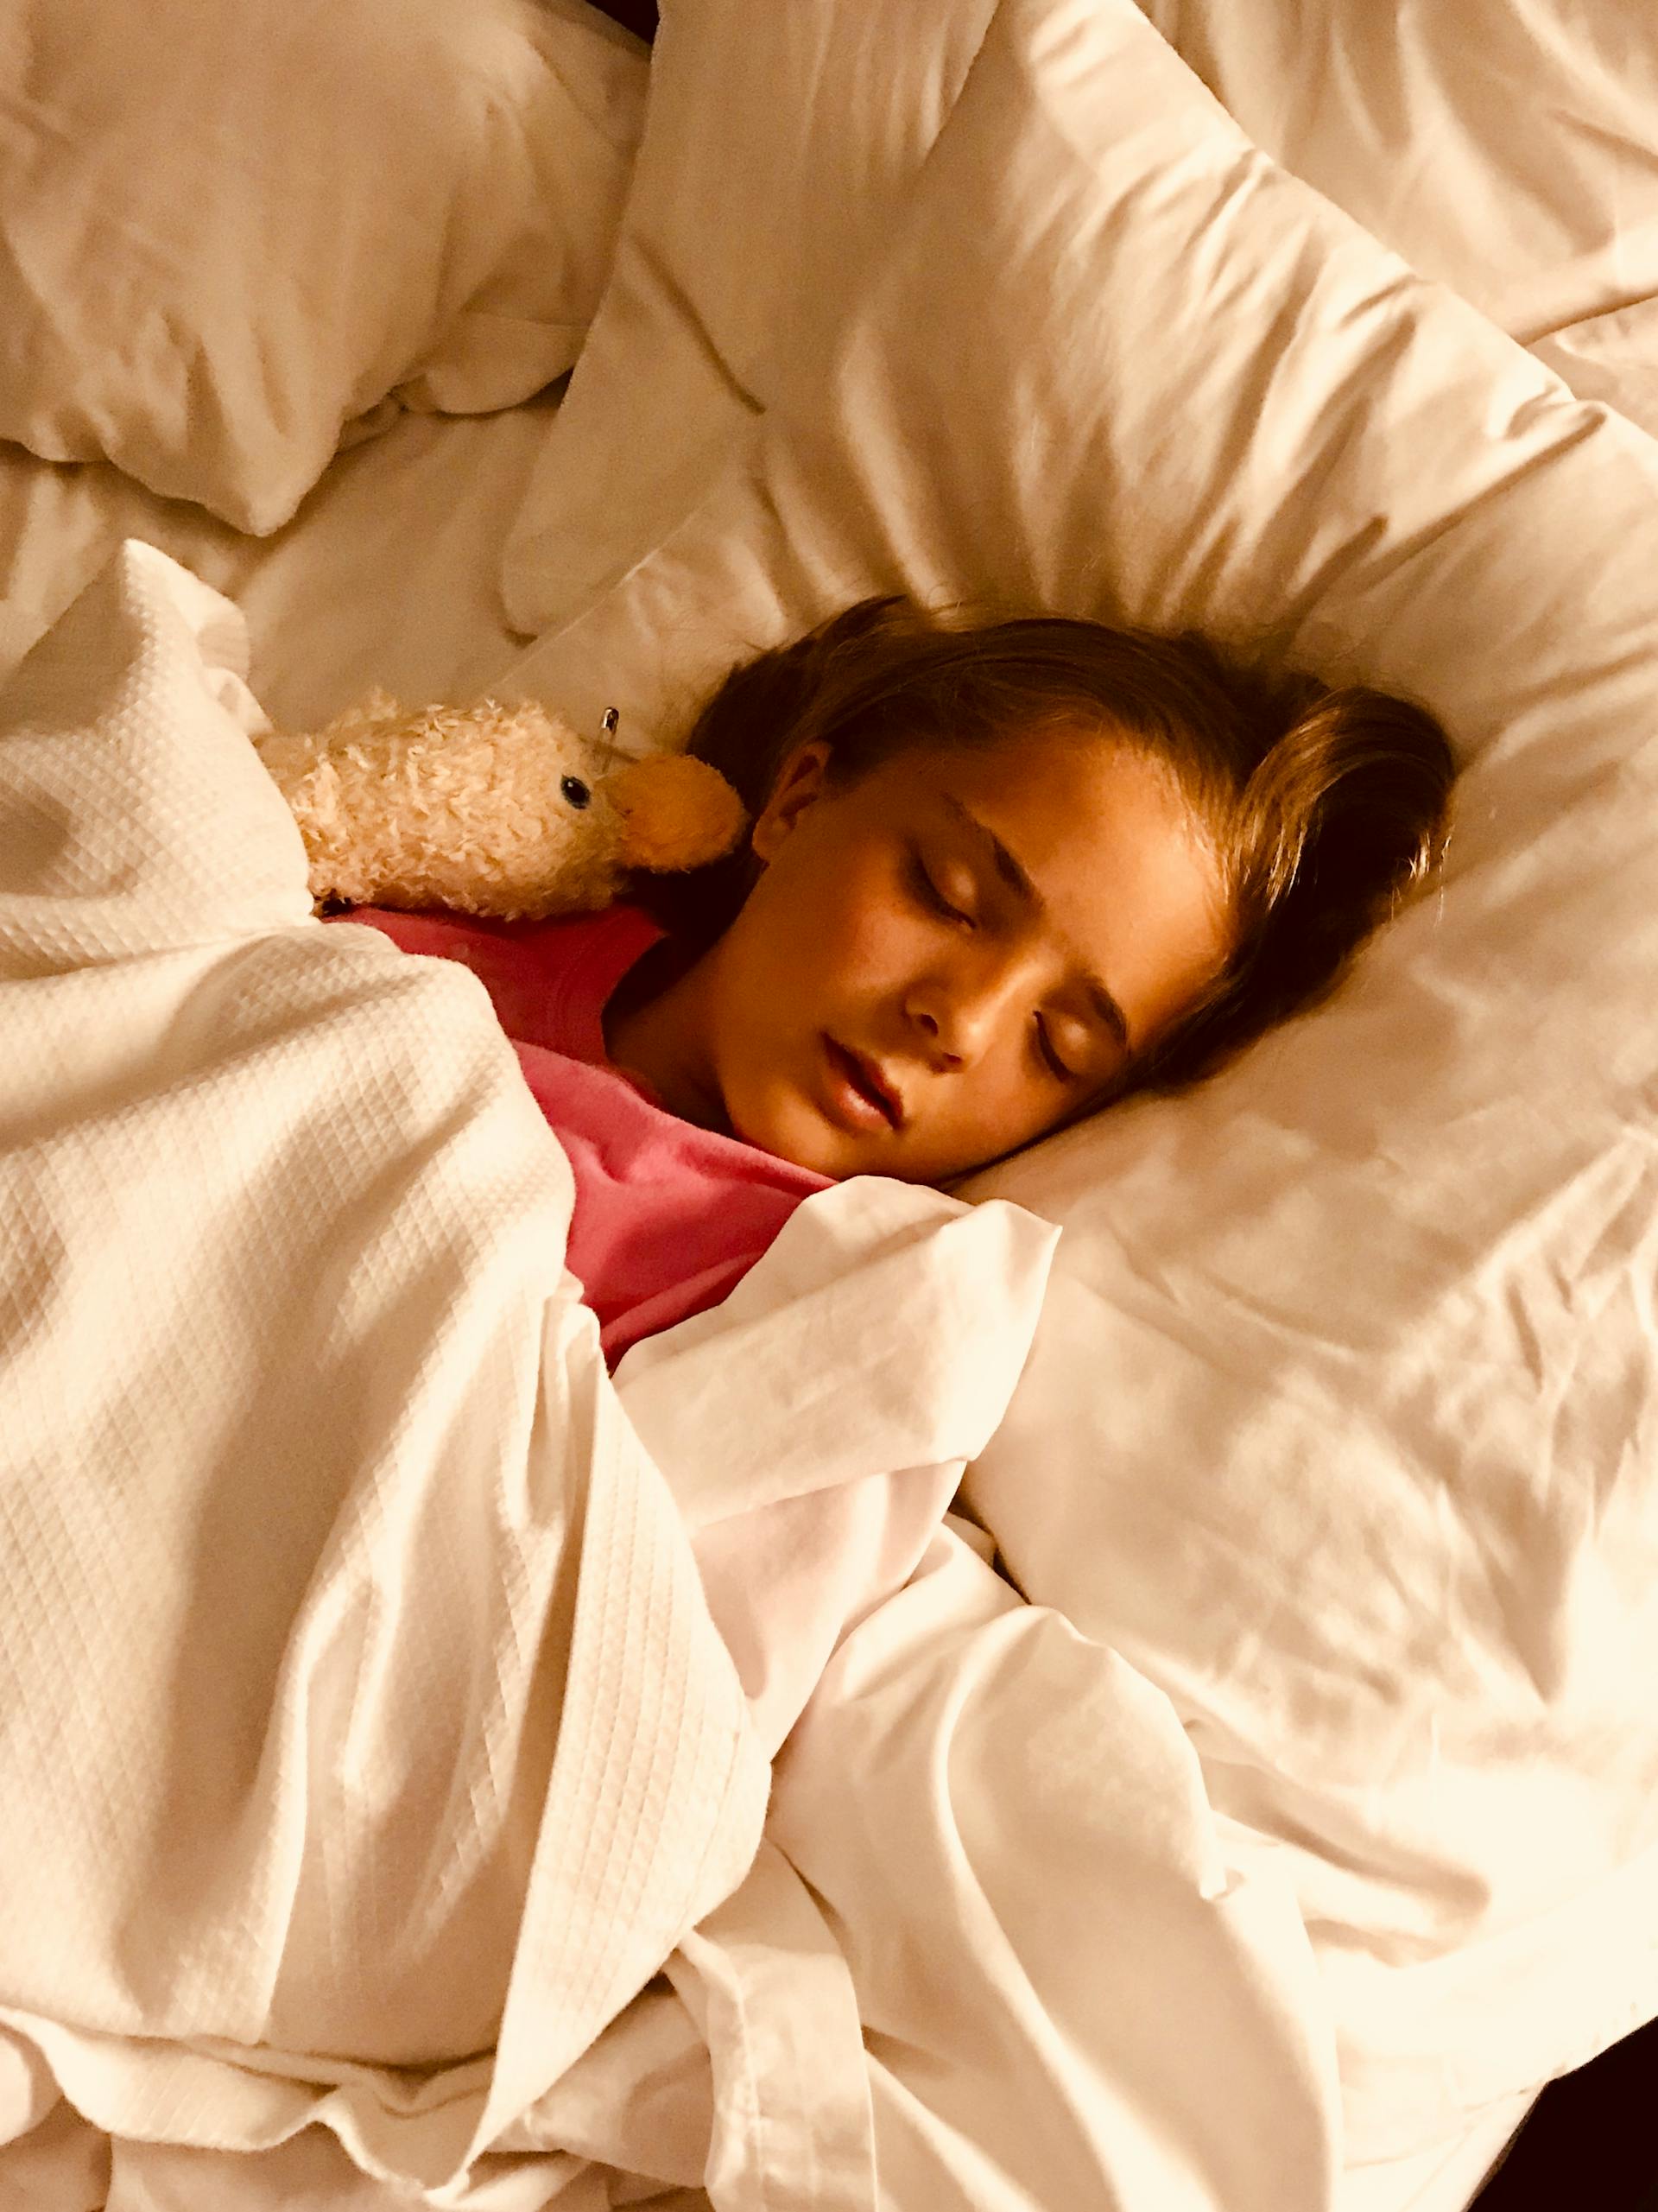 A sleeping little girl | Source: Pexels